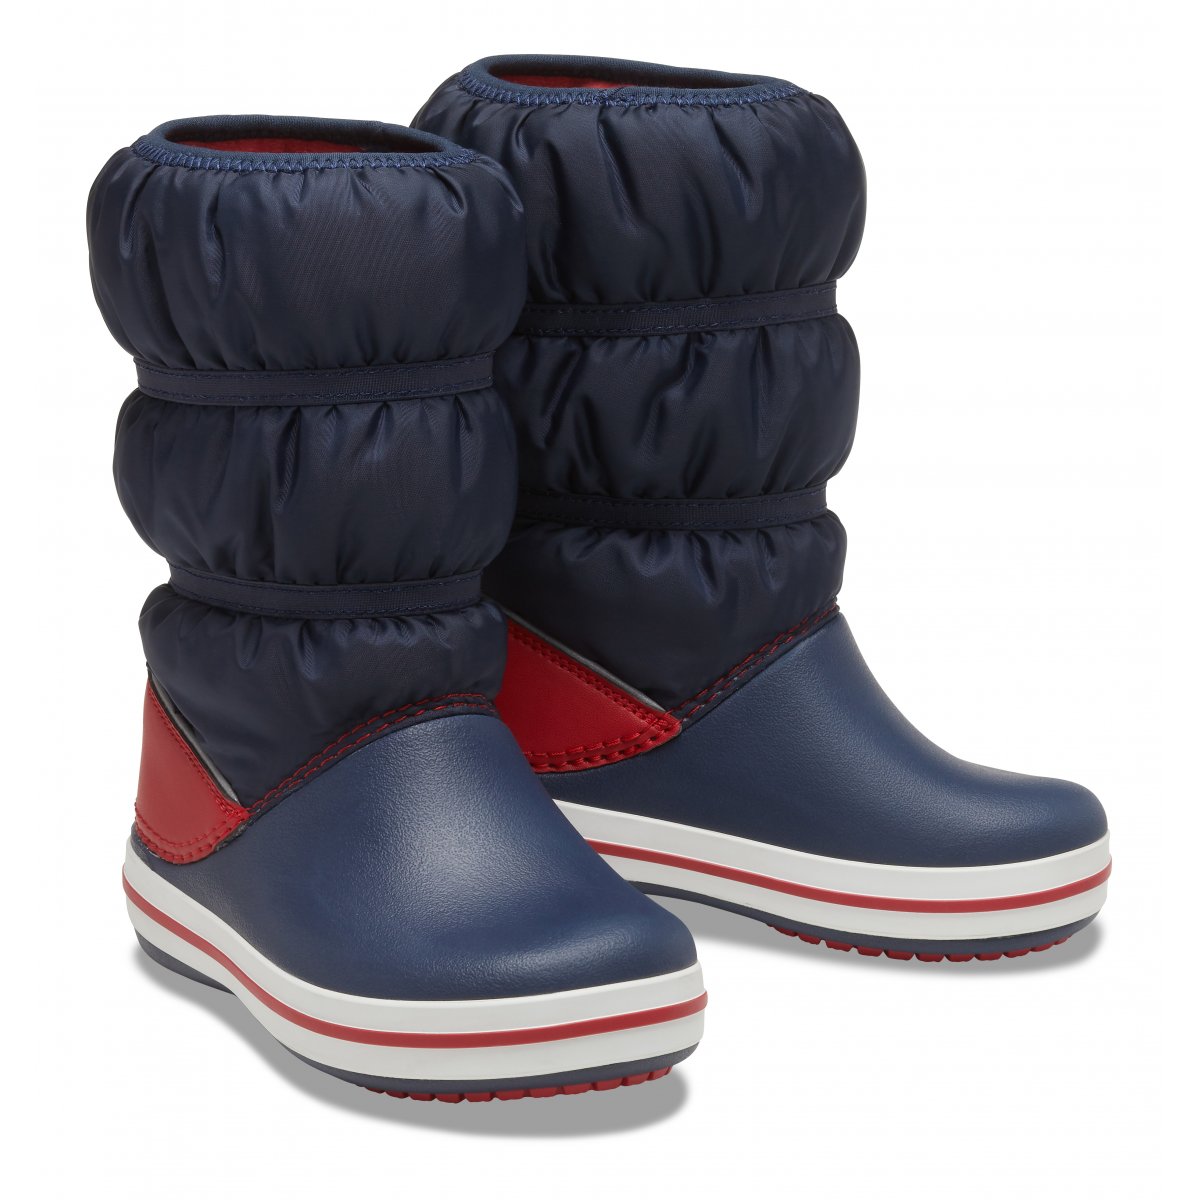 Crocband Winter Boot K